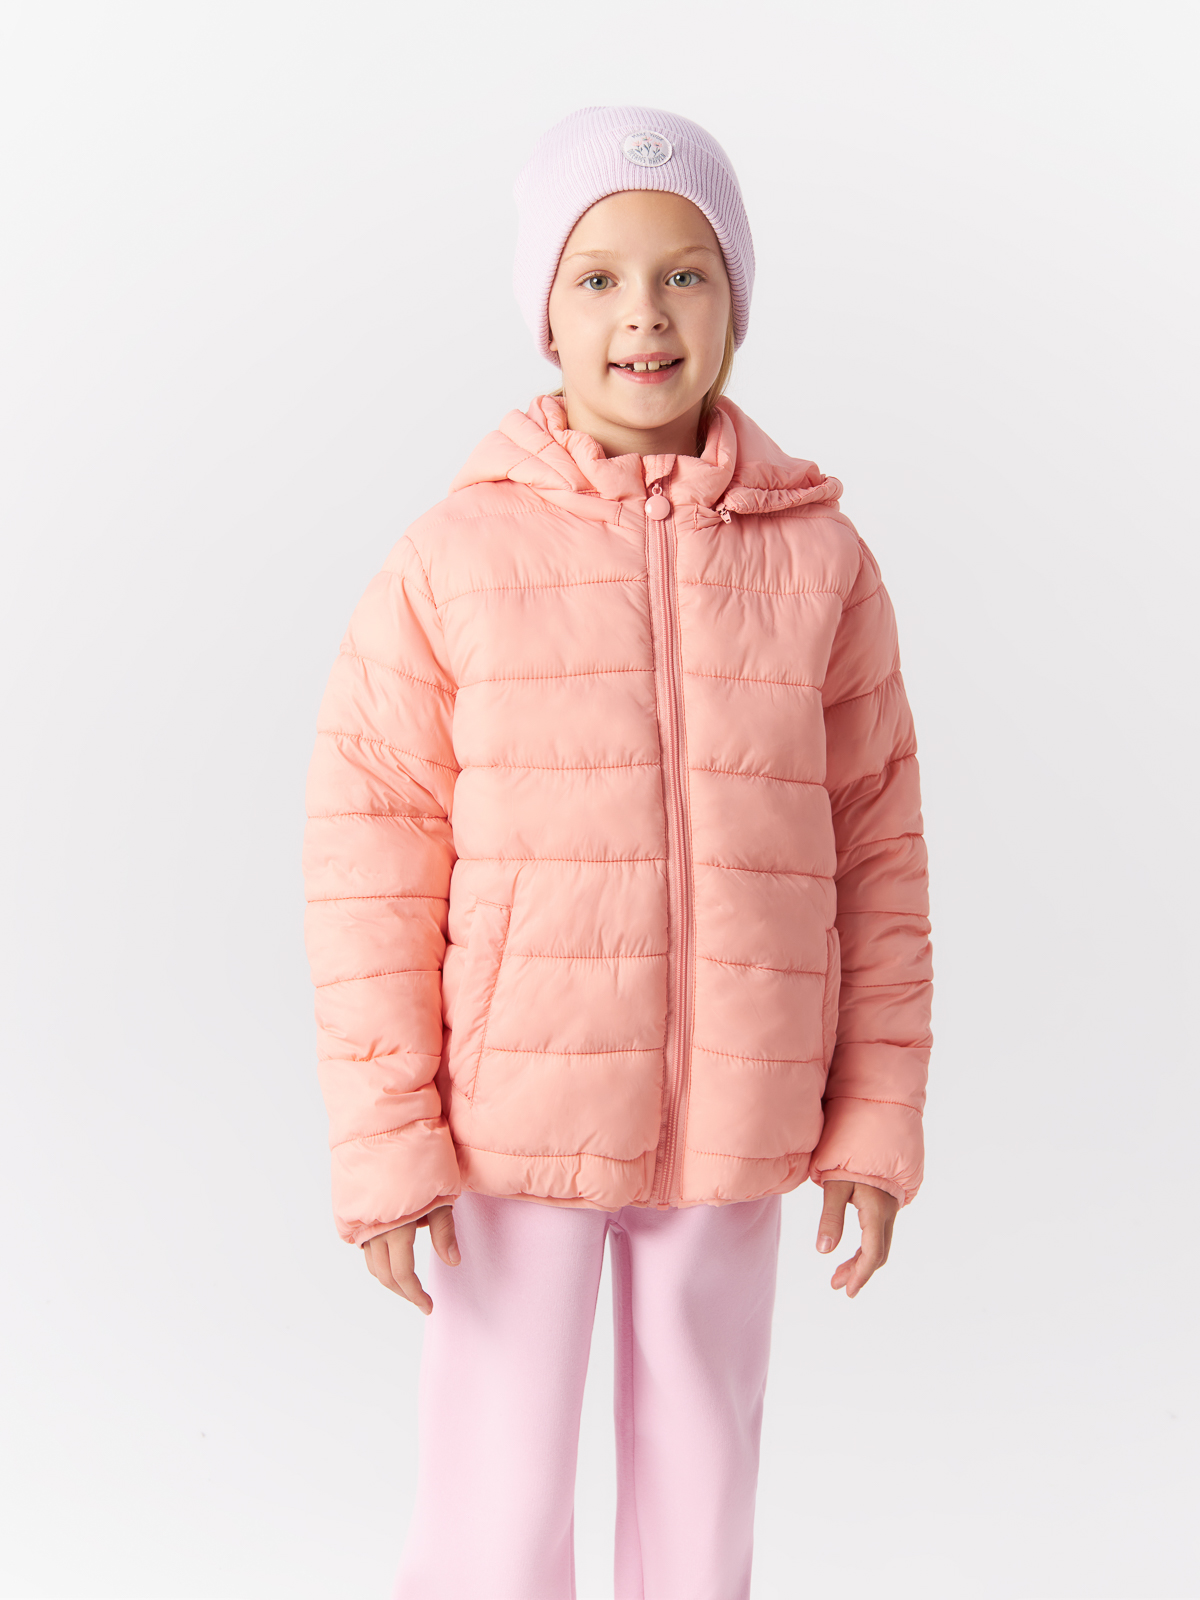 Куртка Mcstyles для девочки, размер 116, SMM13, розовая